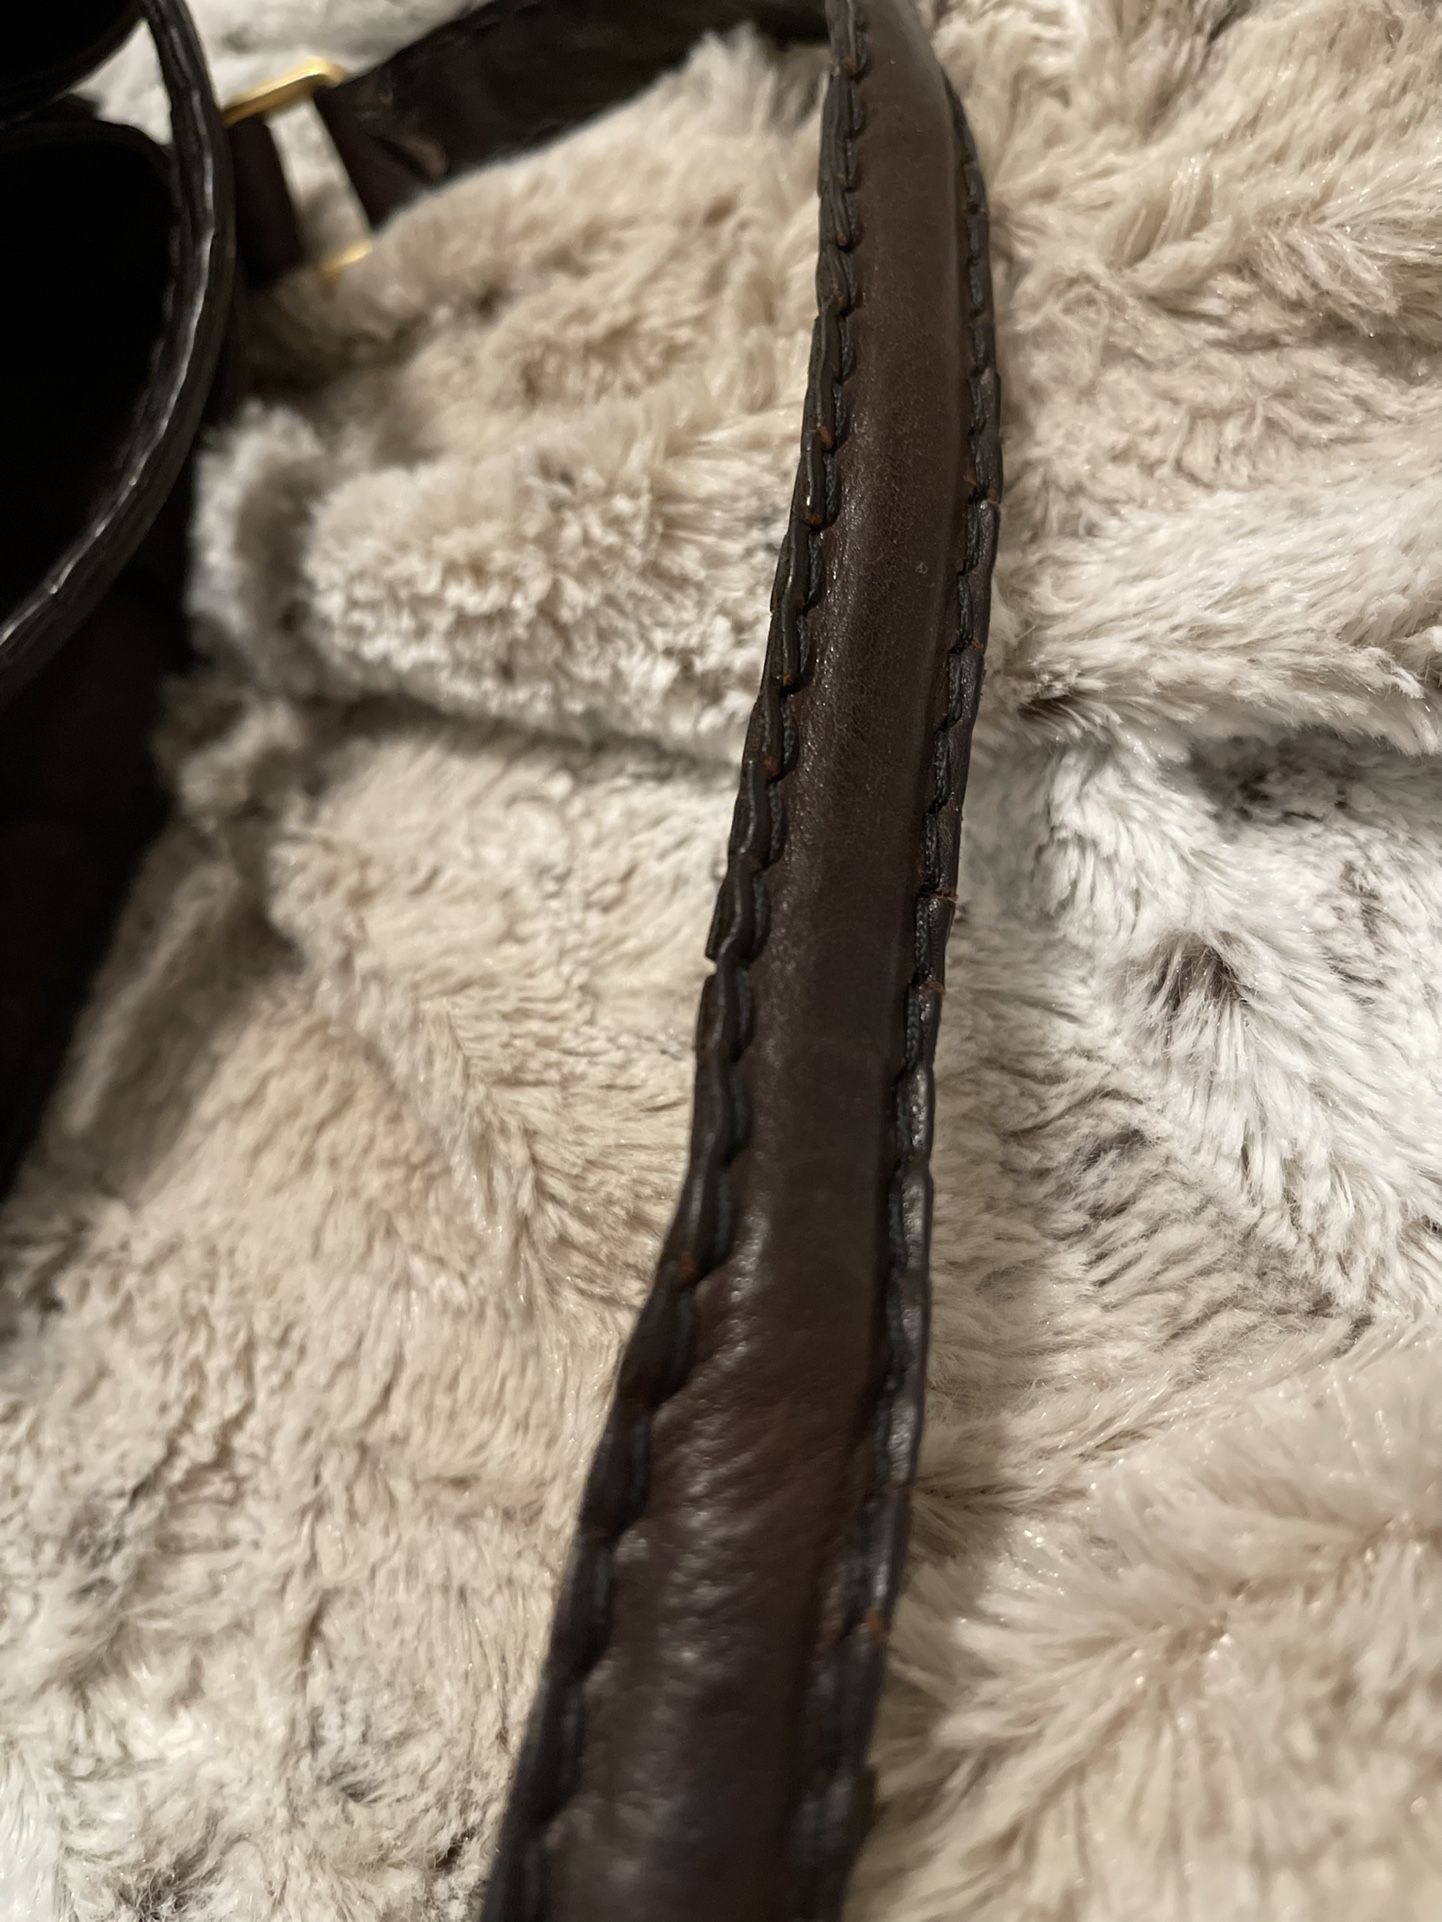 Authentic GUCCI Horsebit Needs One Strap RepairSoon $500